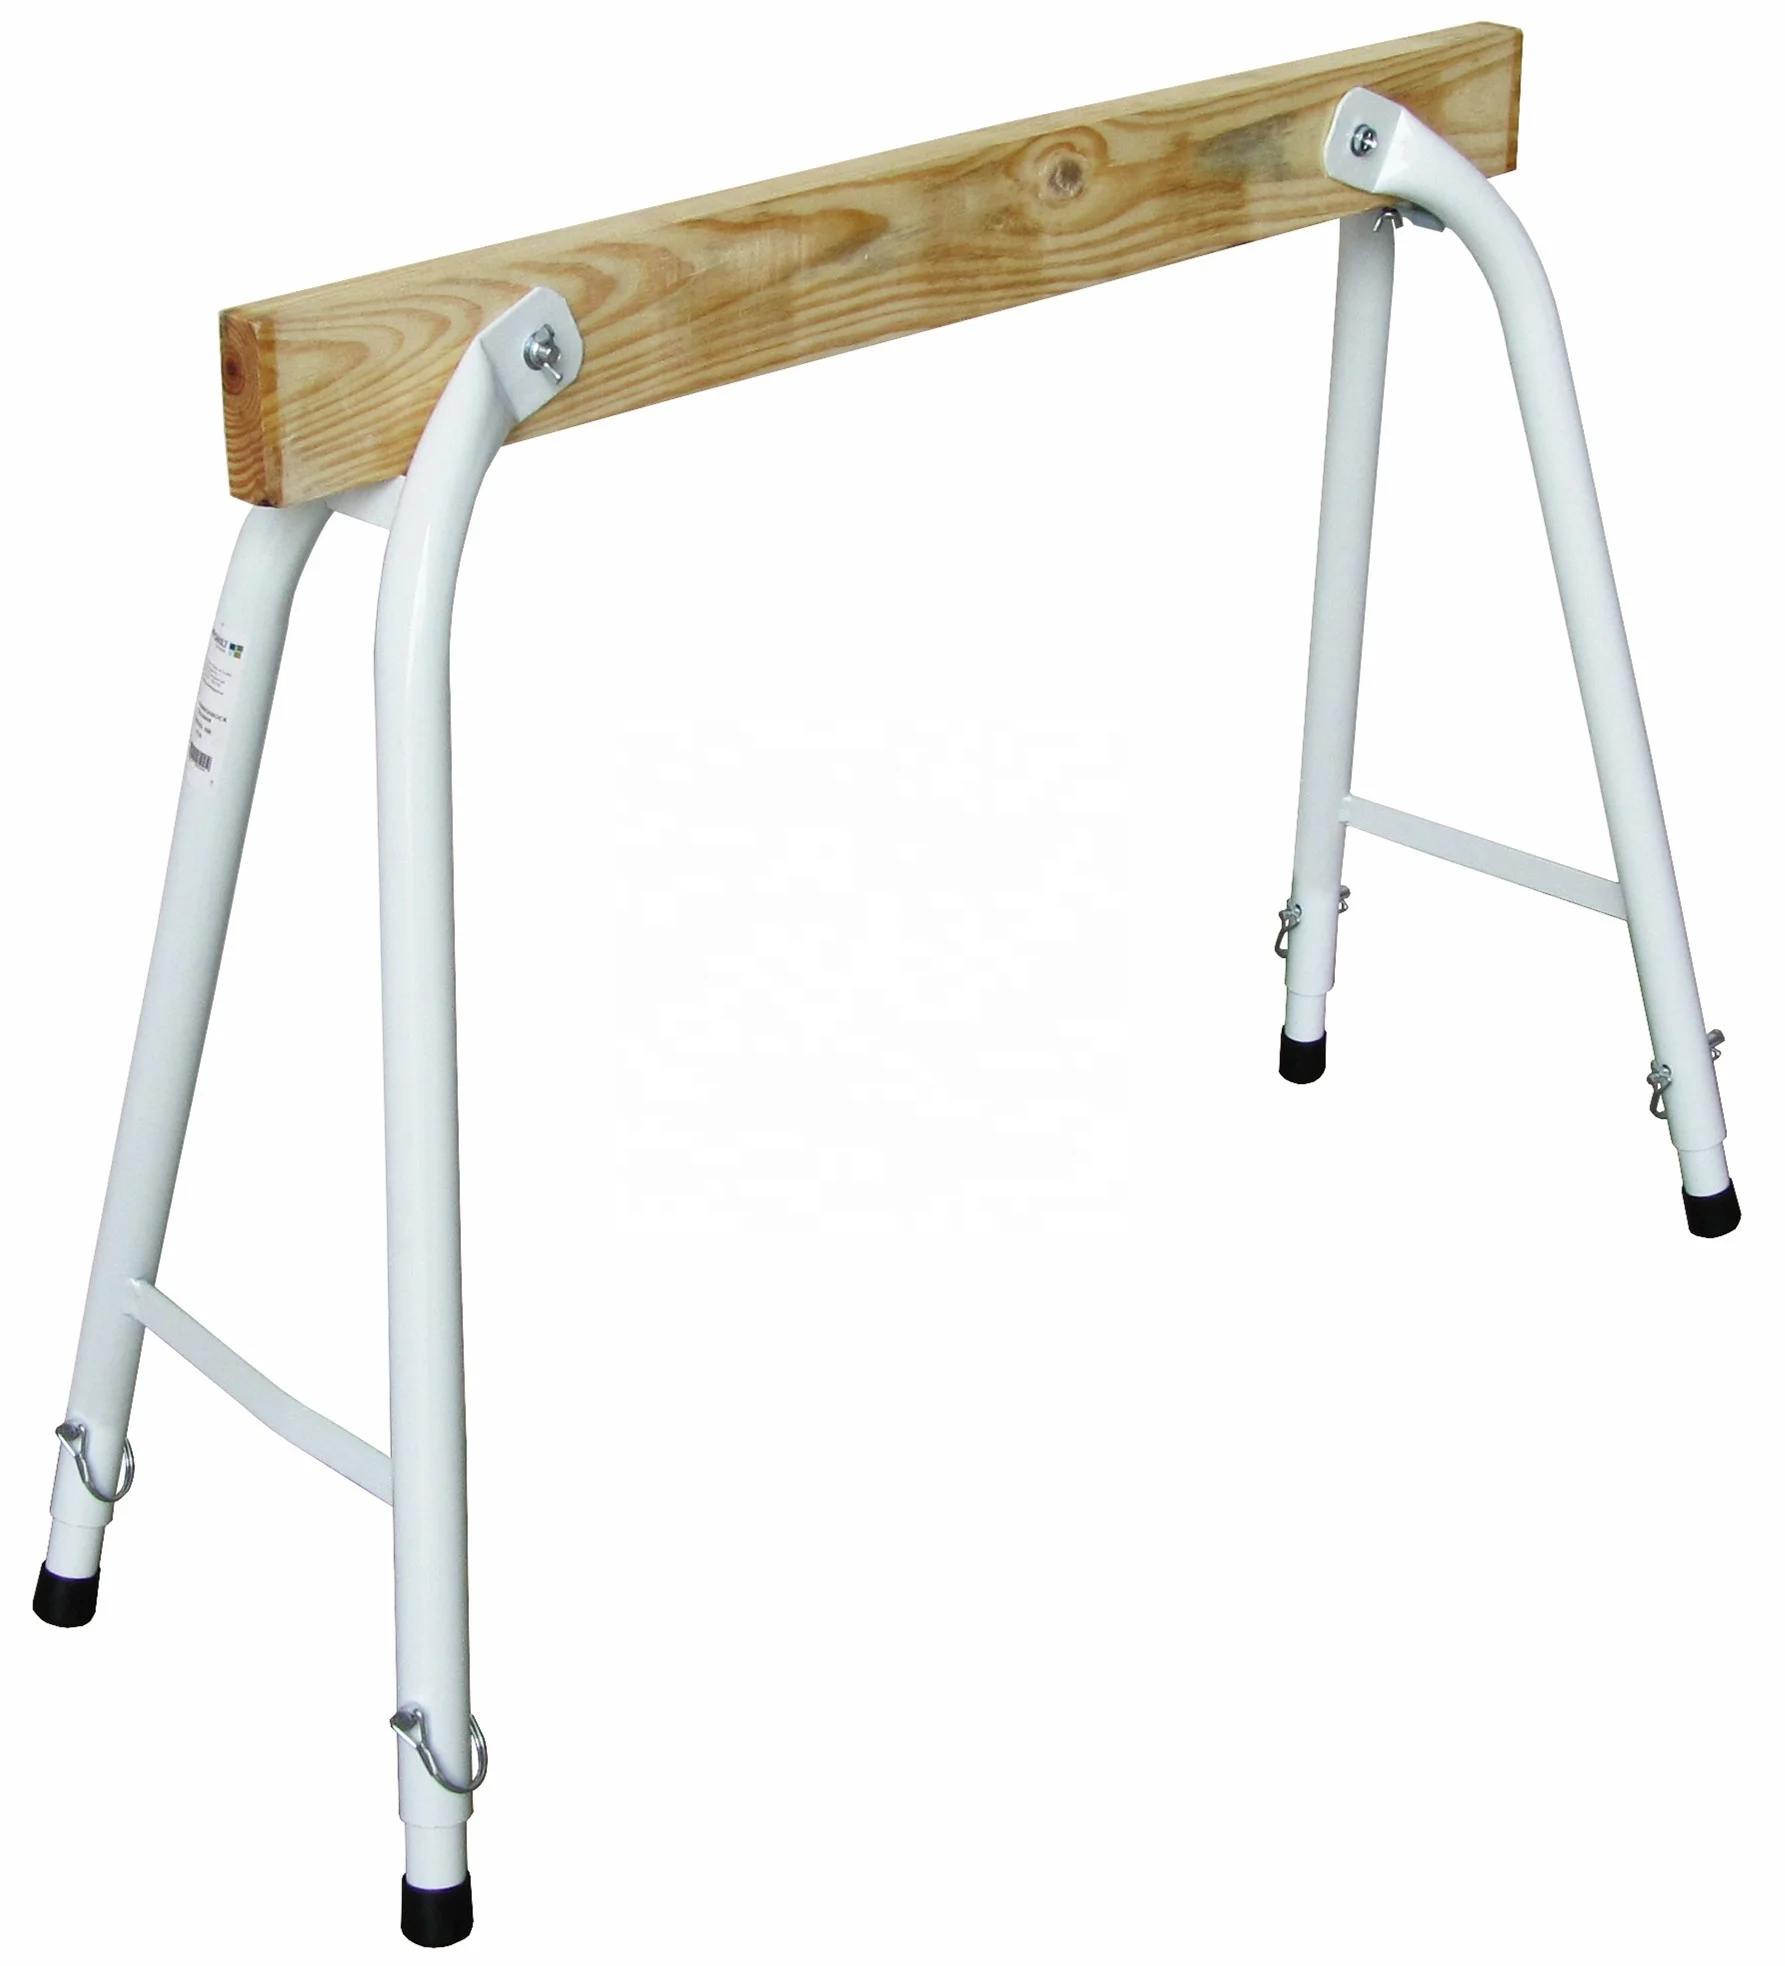 DX-2040 Adjustable steel bow set 2 pcs, Tall Metal saw horse trestles Steel wood platform Wood bench for sawing wood